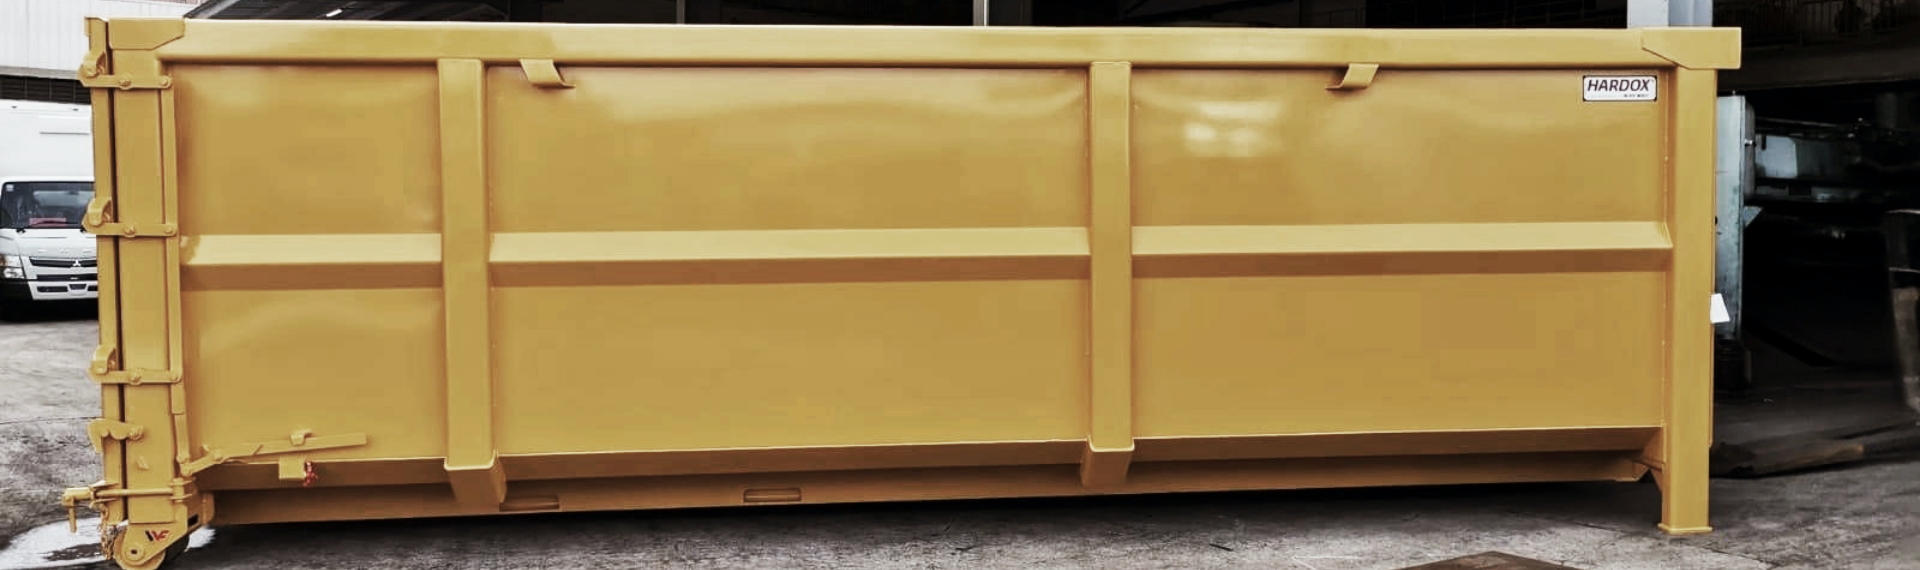 Hardox® HiAce鋼板で作られた、スタイリッシュな黄色い廃棄物コンテナ。